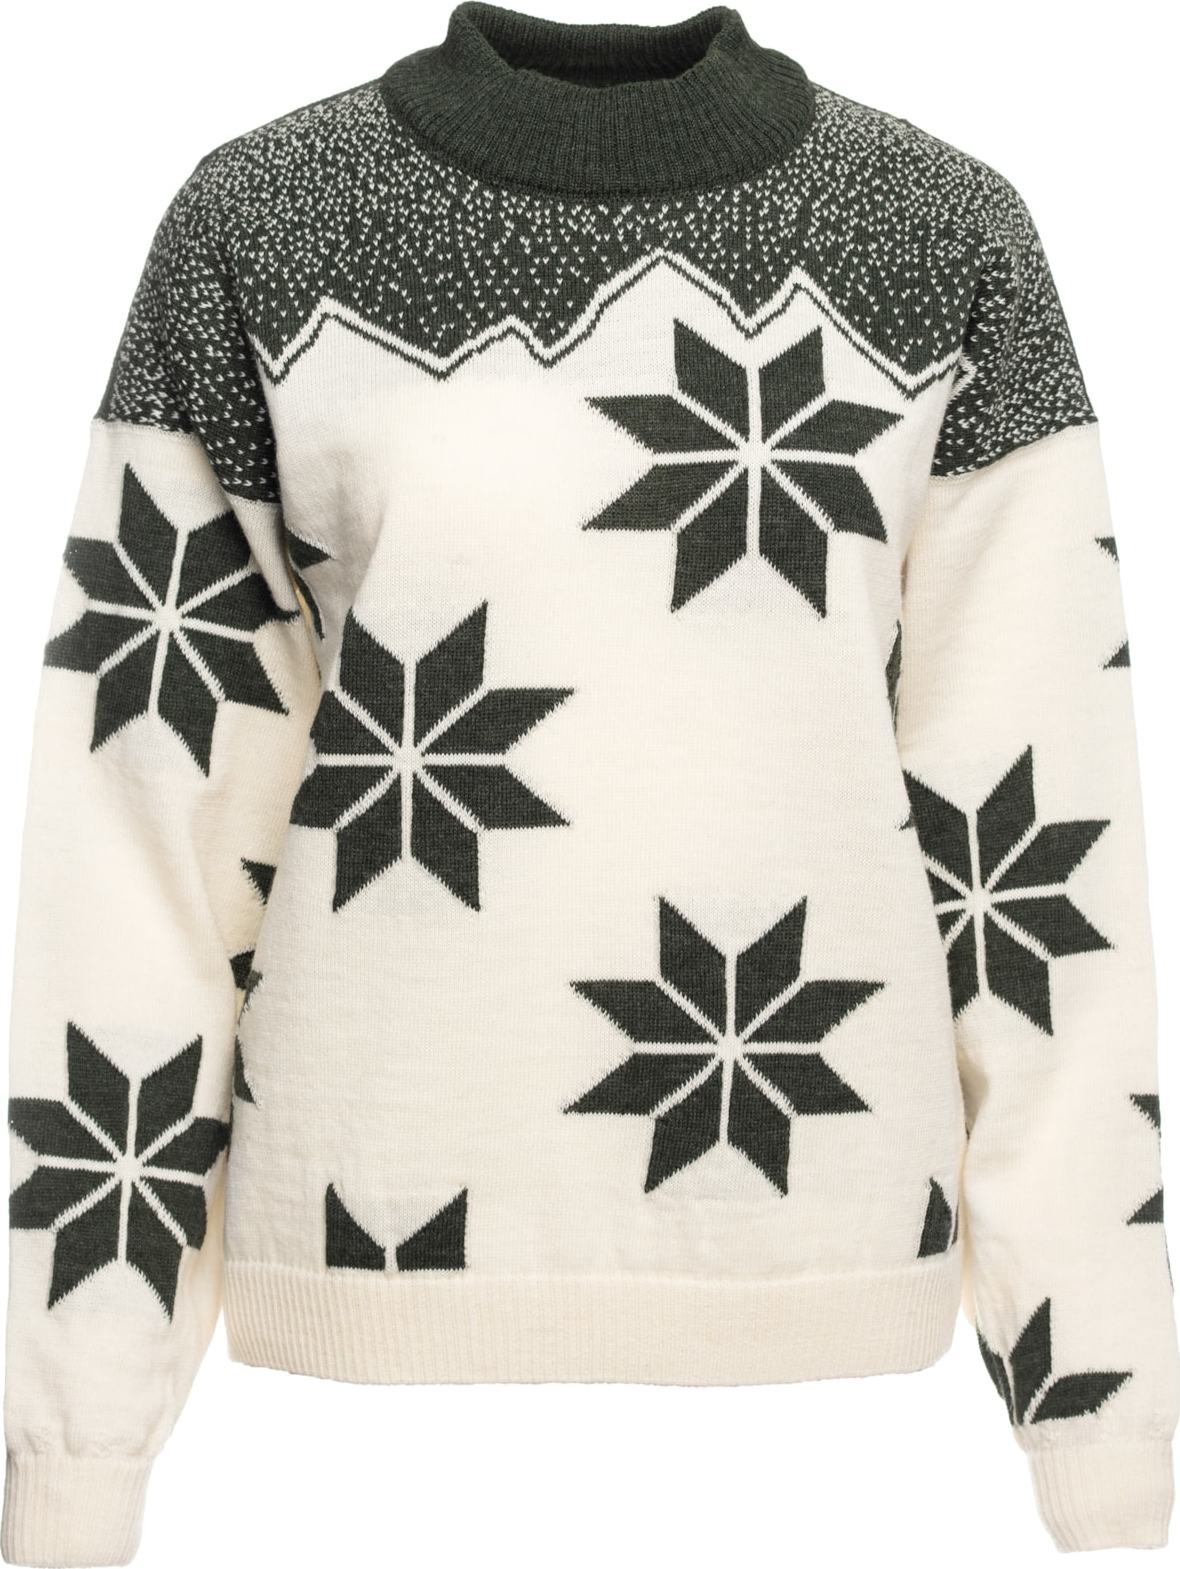 Women’s Winter Star Sweater Offwhite Dark Green